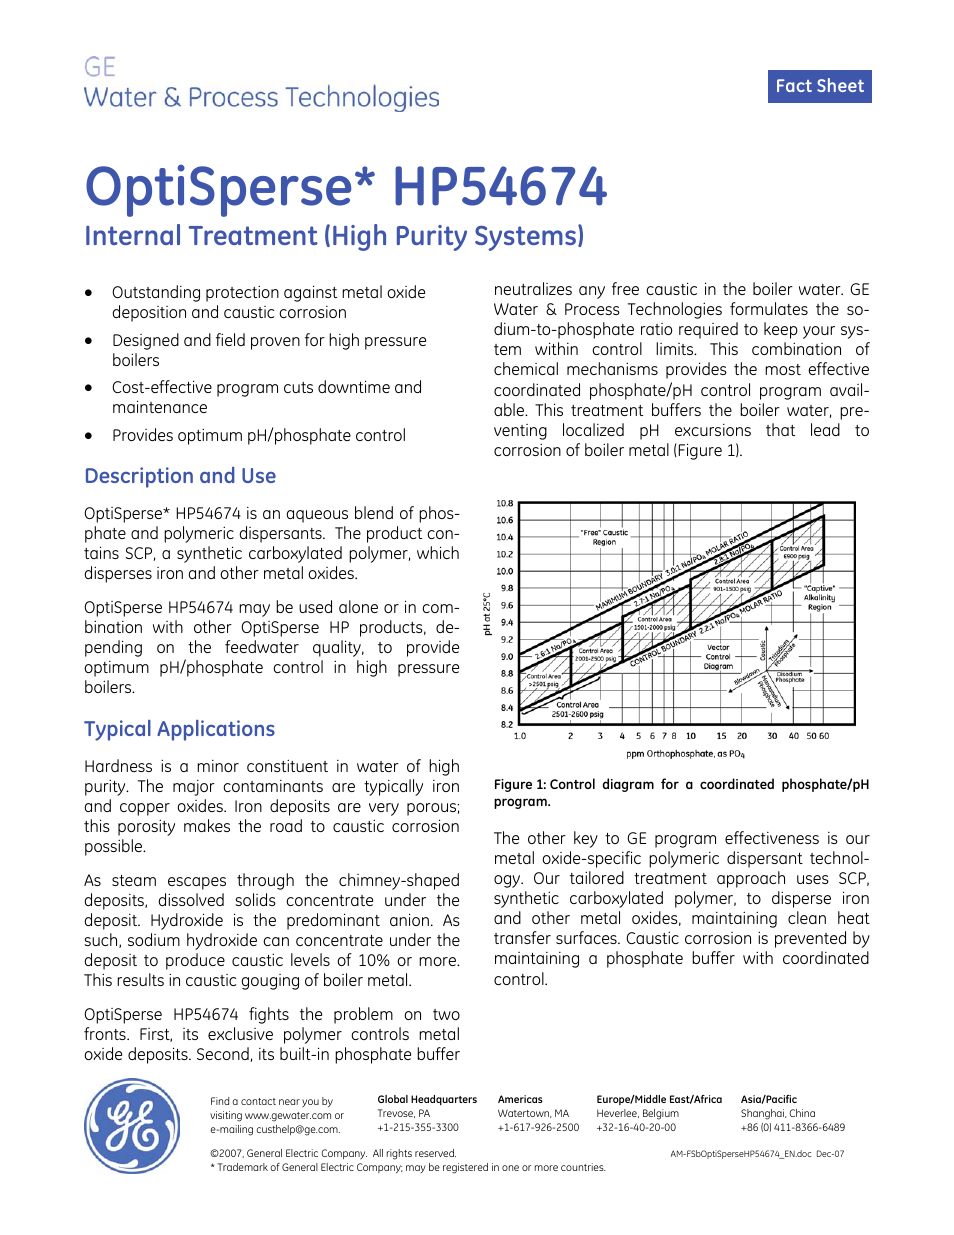 Boiler Water Treatment Chemicals - OptiSperse HP54674